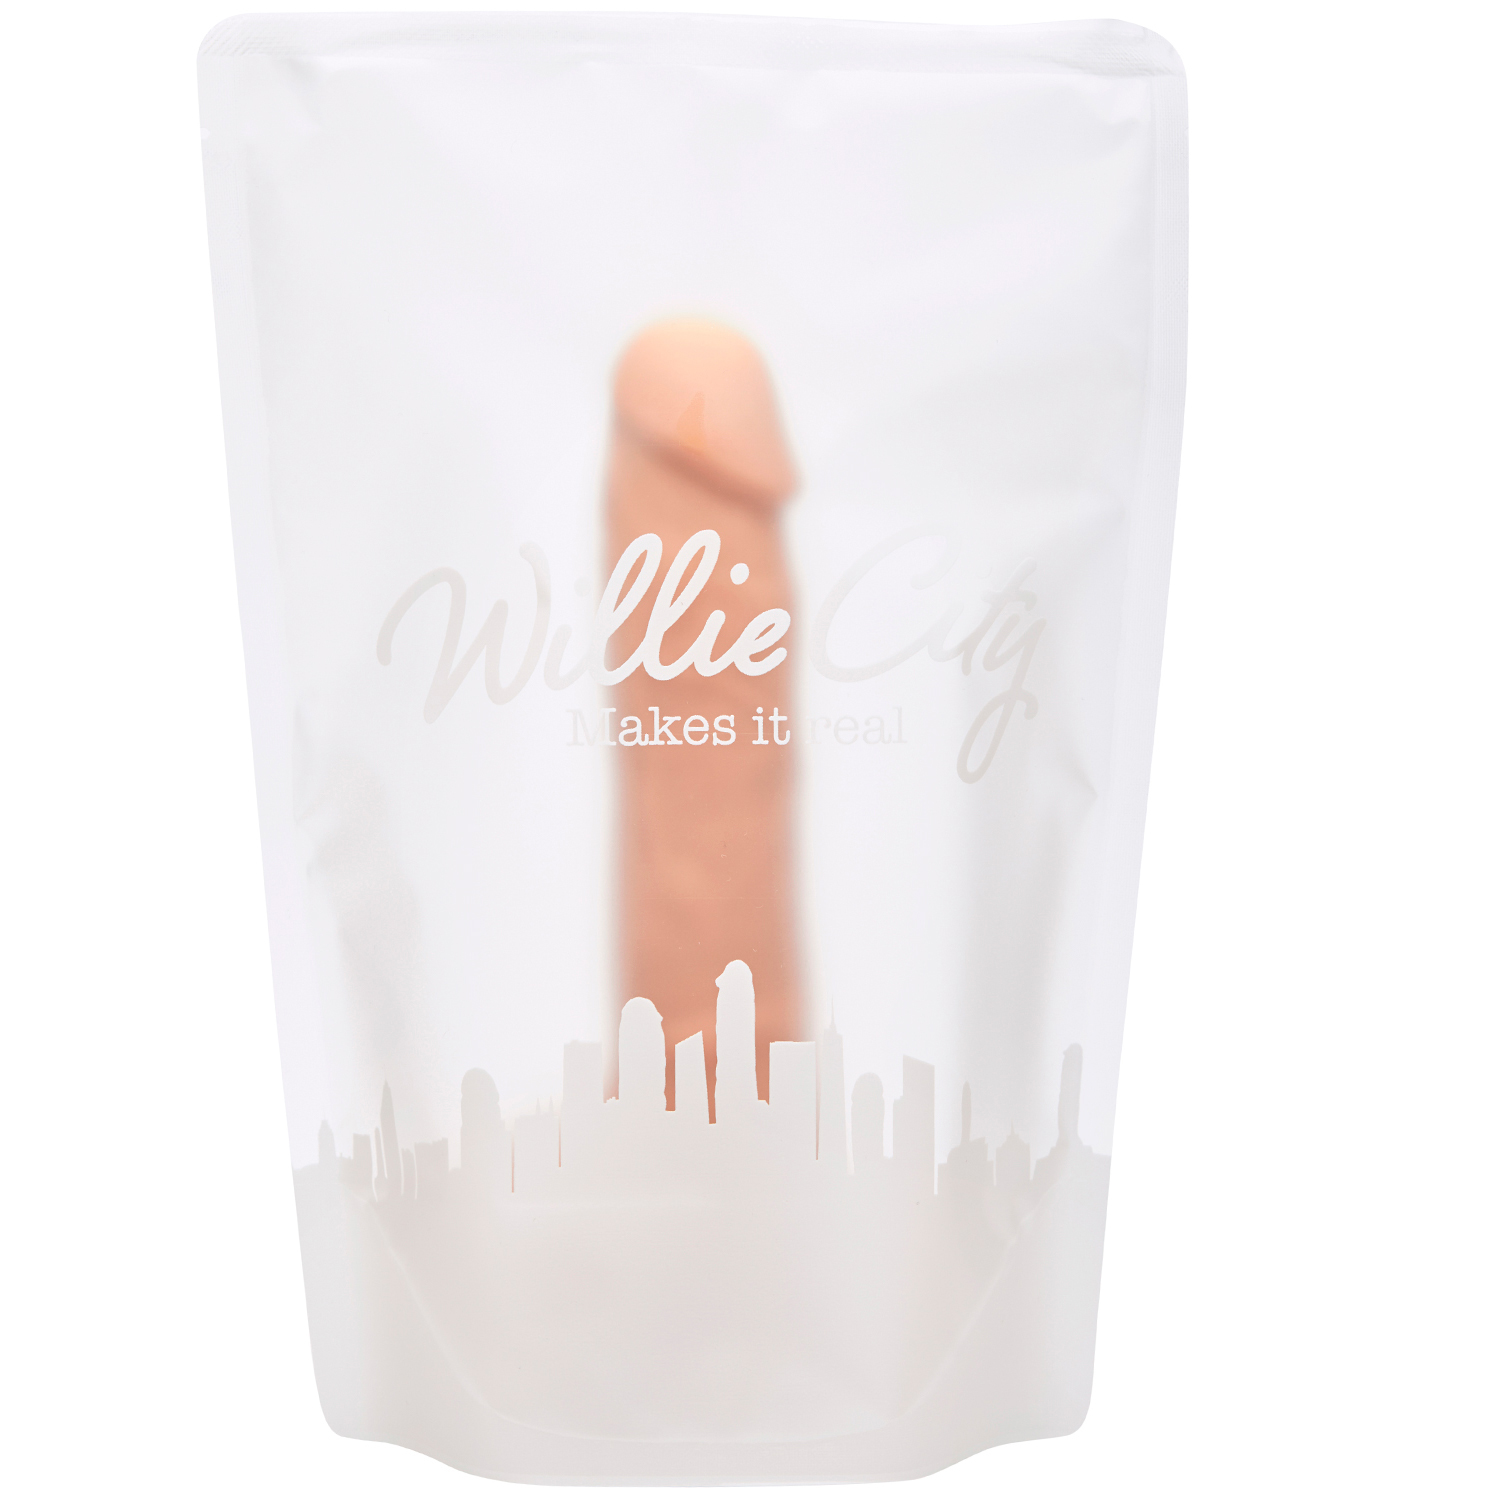 Willie City Luxe Realistisk Silikondildo 22 cm   - Nude